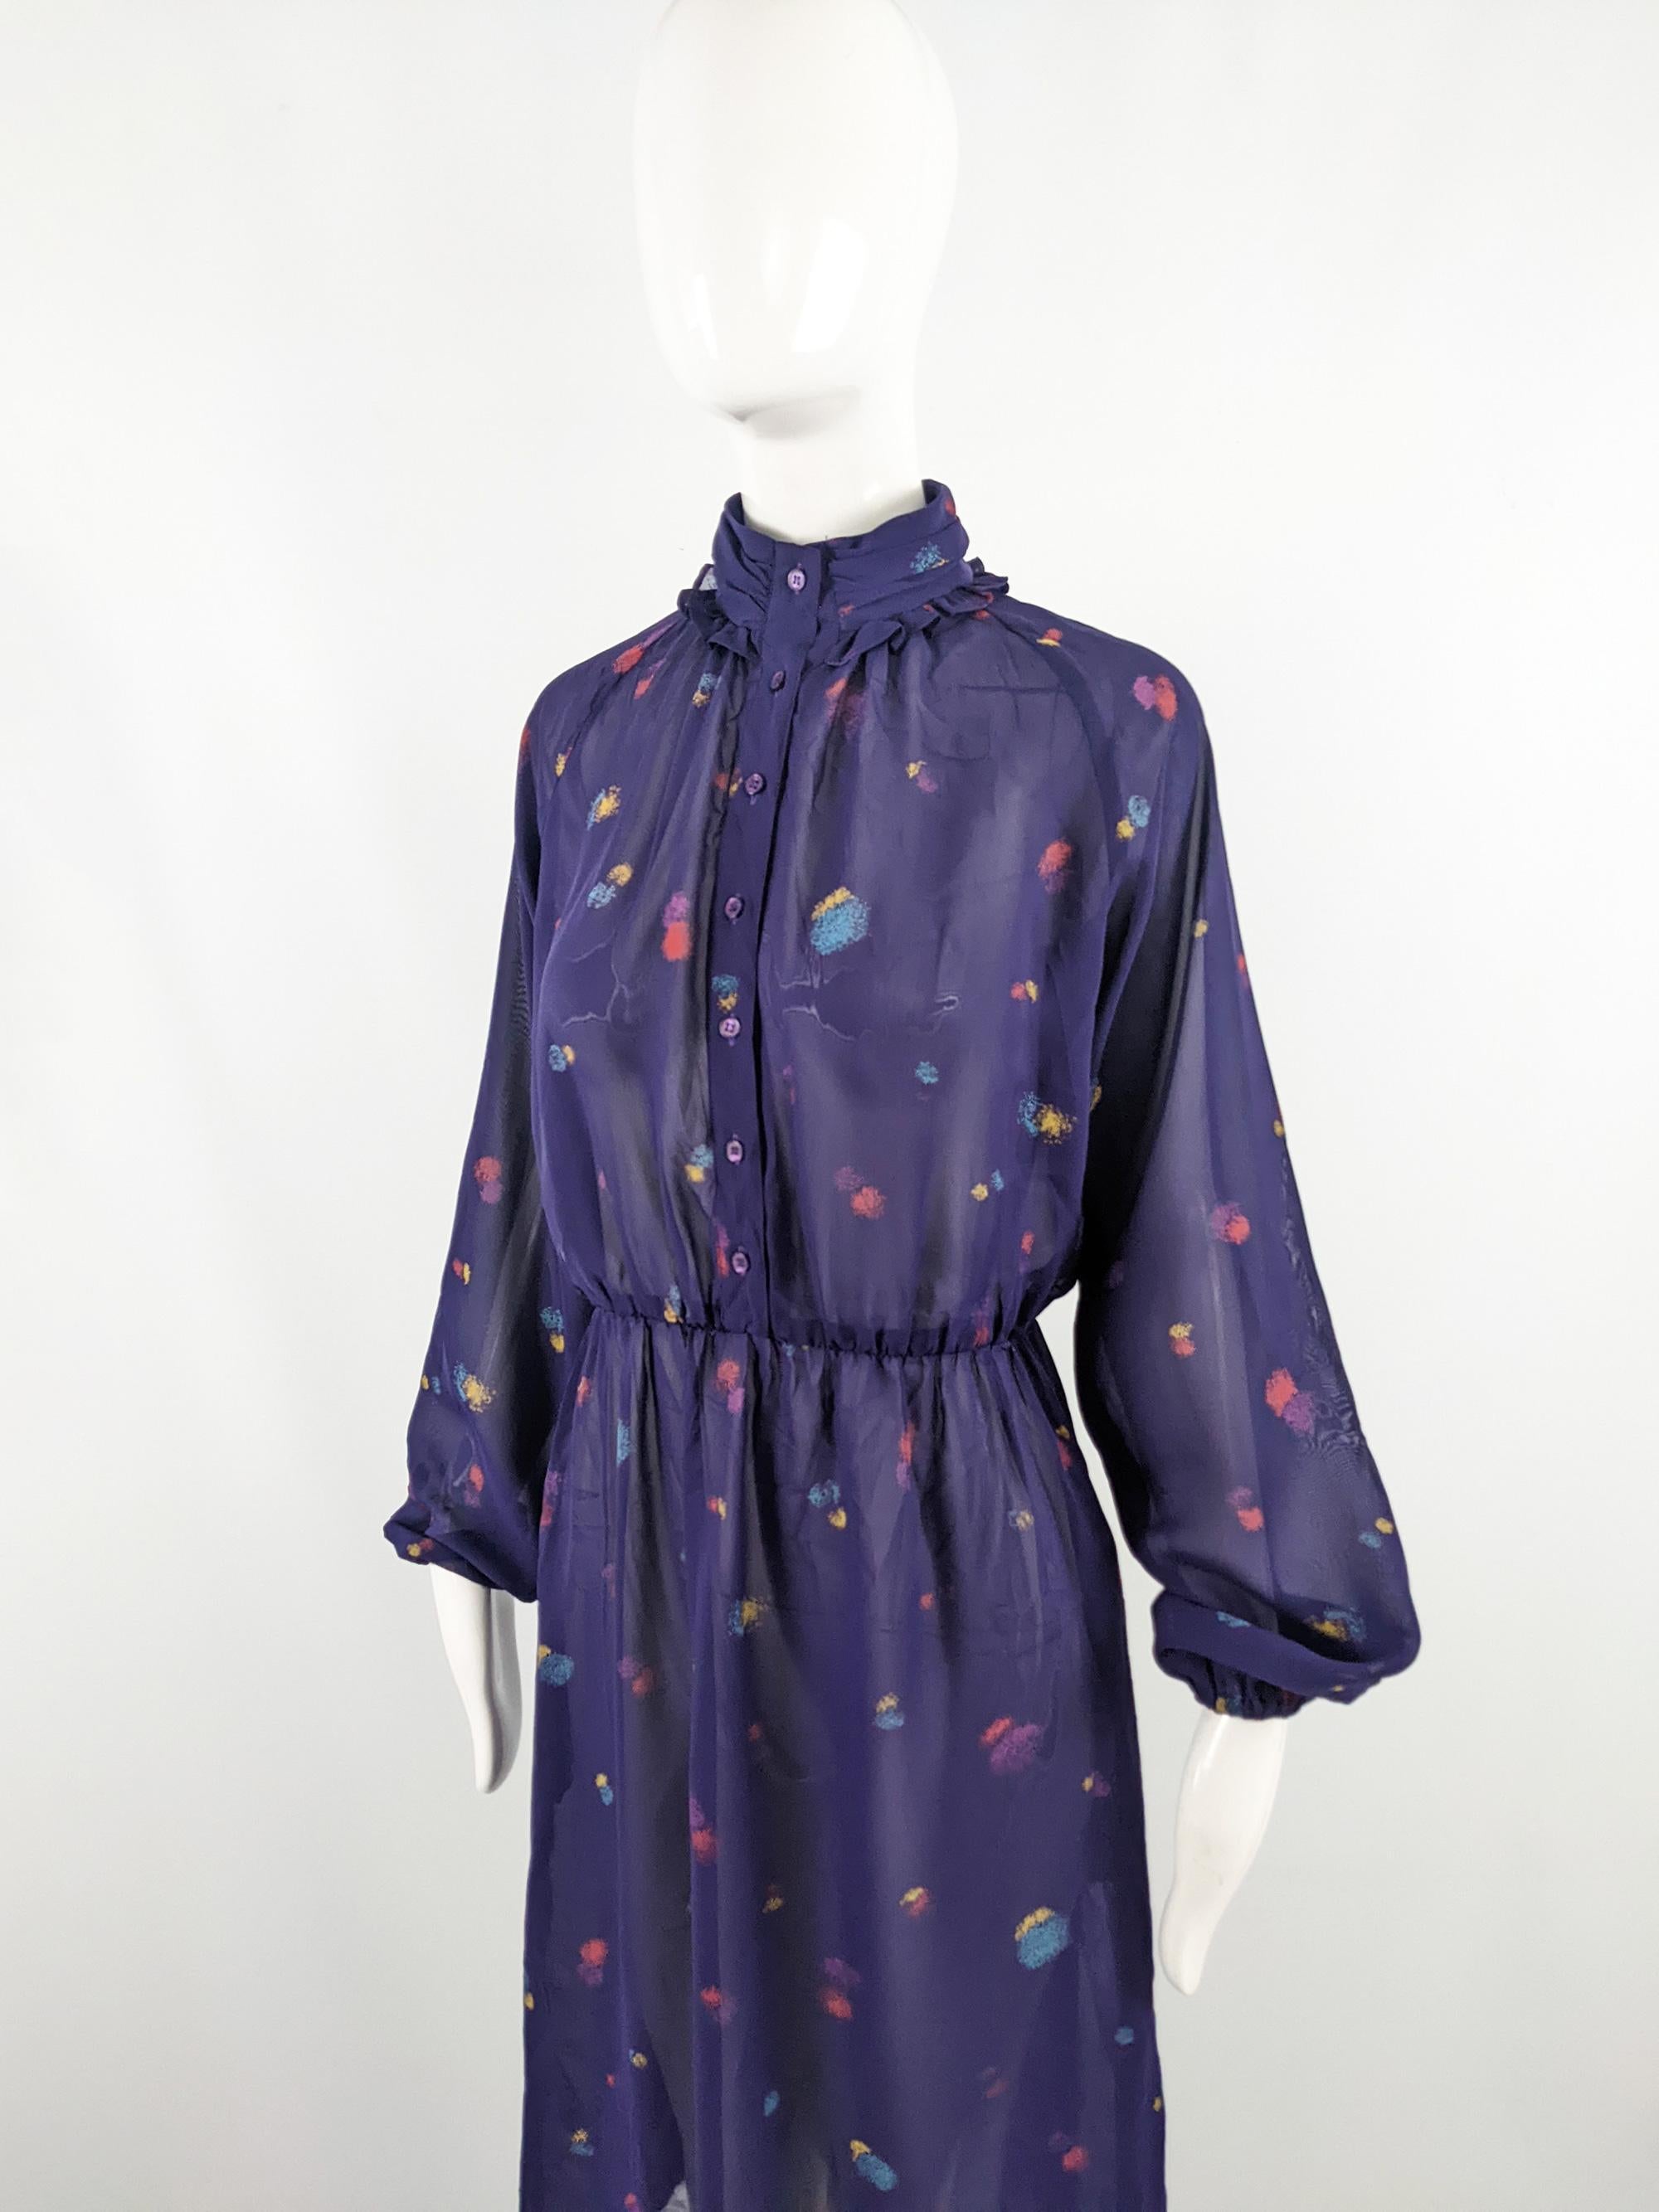 Aroche Paris Vintage 1970s Sheer Purple Ruffle Collar High Neck Shirt Dress For Sale 1